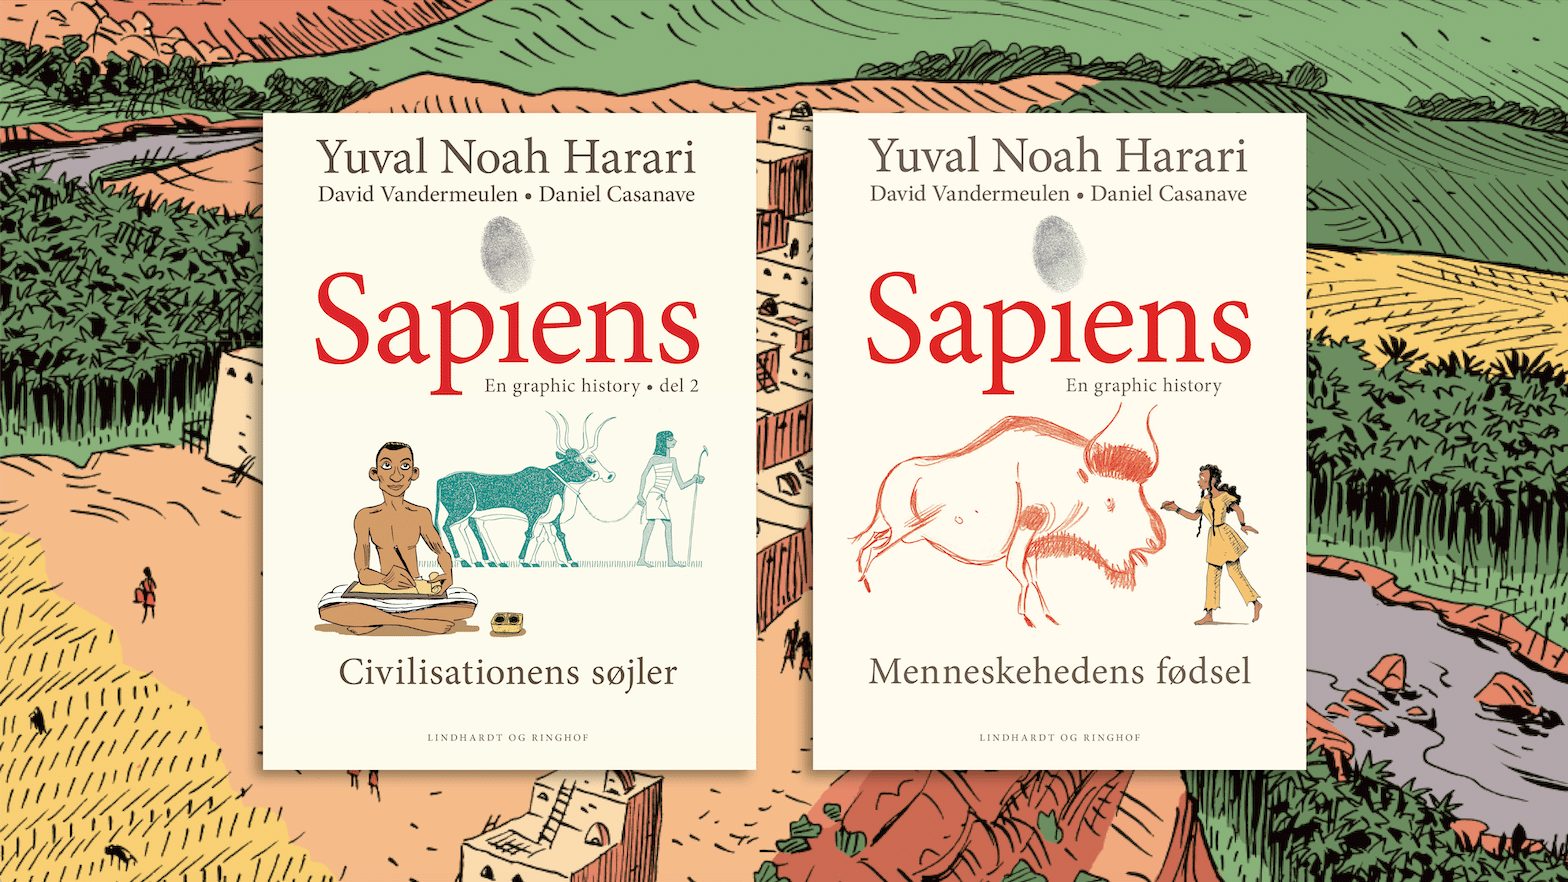 sapiens, yuval noah harari, harari, menneskehedens fodsel, civilisationens sojler